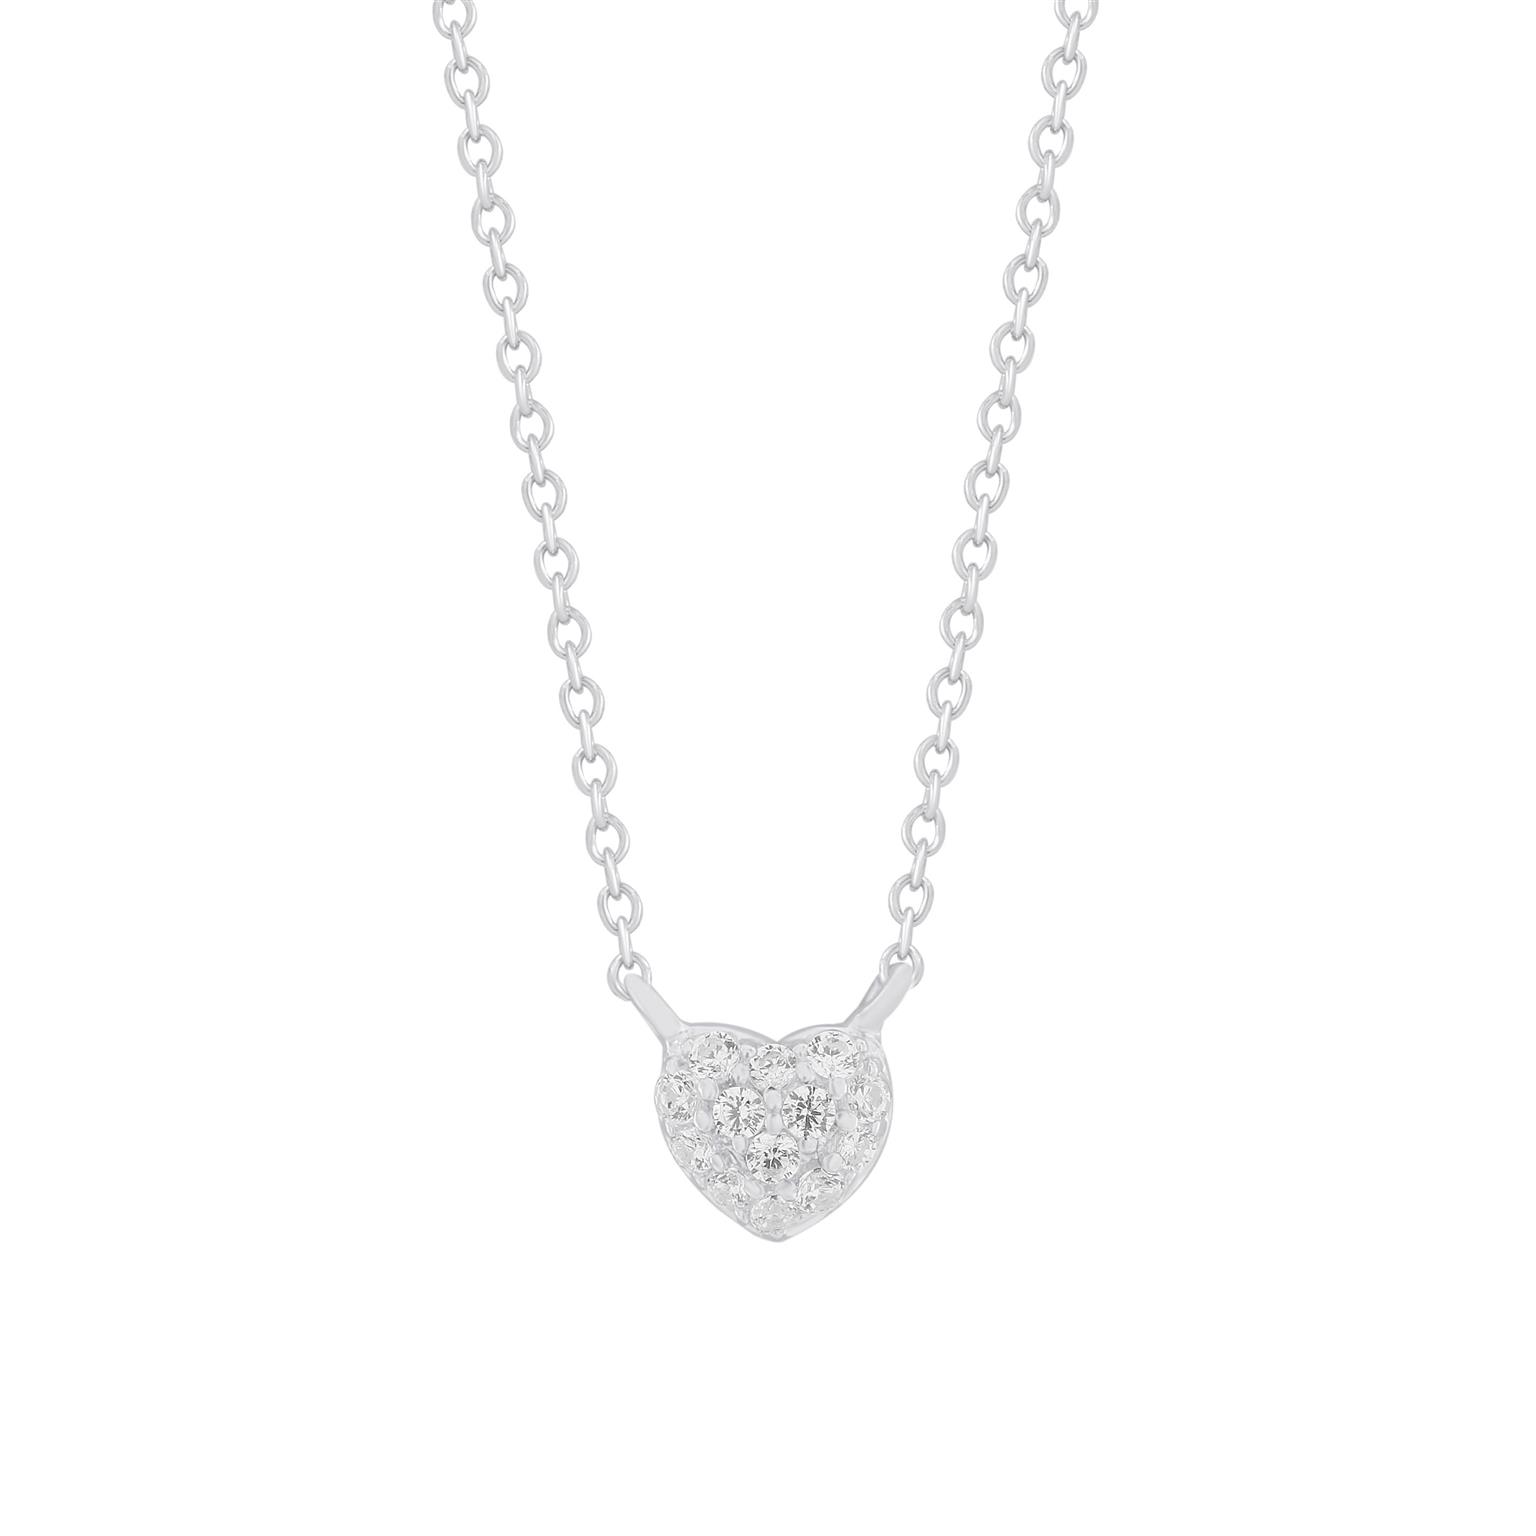 Tiny Minature Heart Diamond White Gold Necklace - Germani's Jewelry